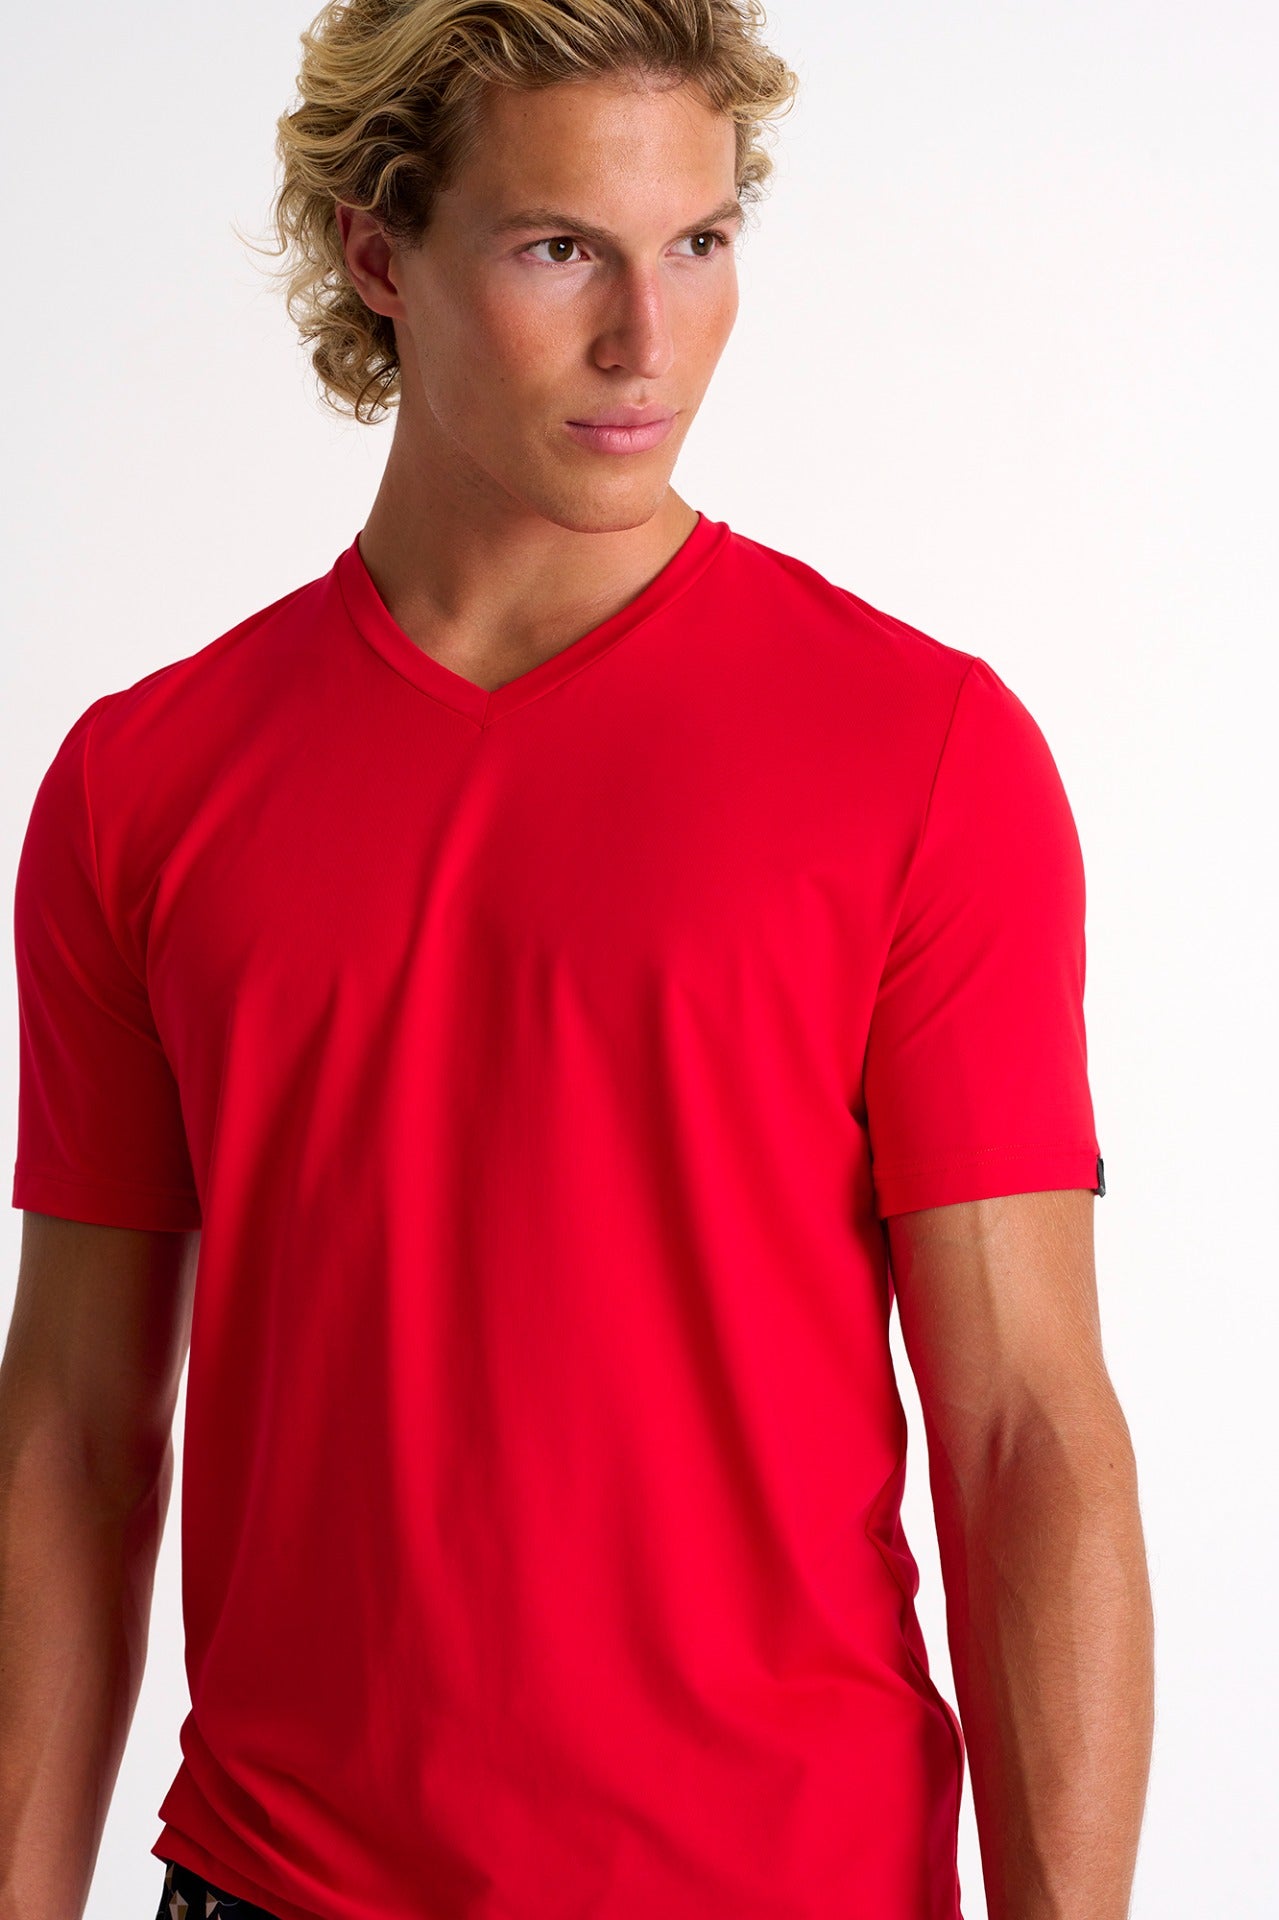 62320-91-300 - Microfiber V-Neck T-Shirt S / 300 Red